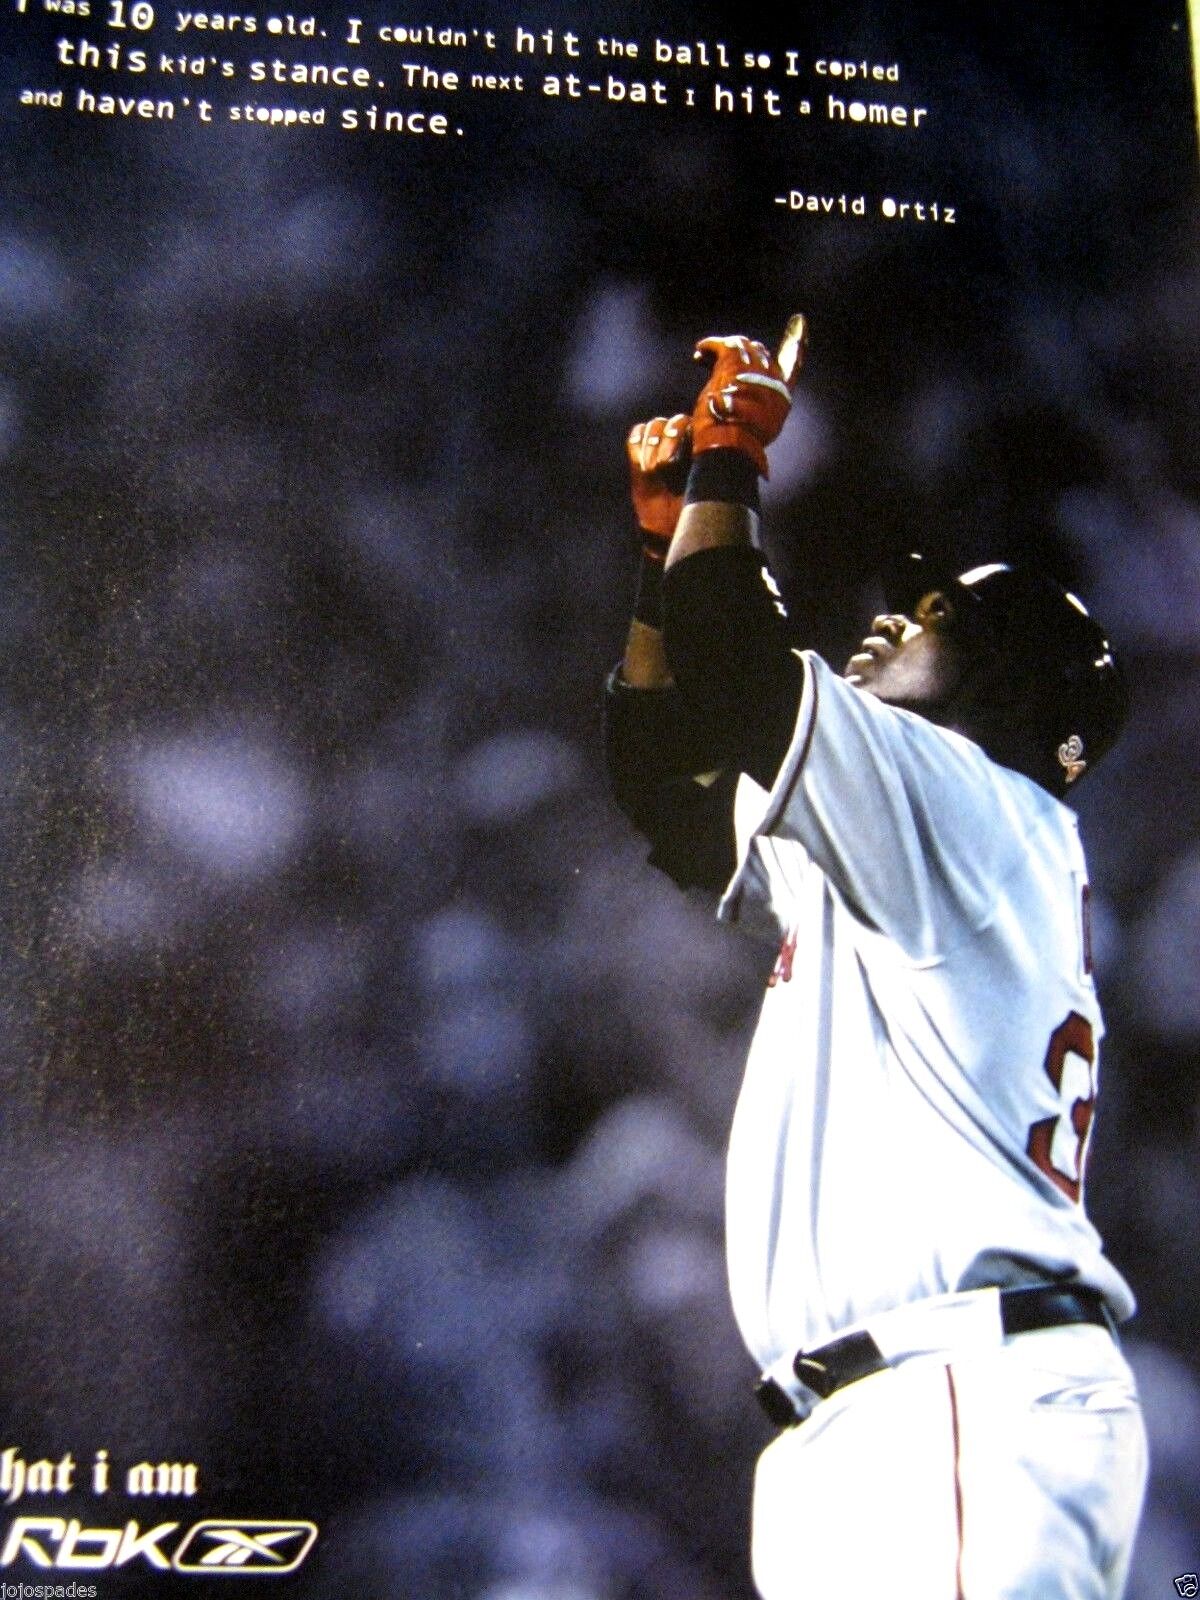 2006  REEBOK Ad-David Ortiz-Big Papi-Boston Red Sox-Original Print Ad